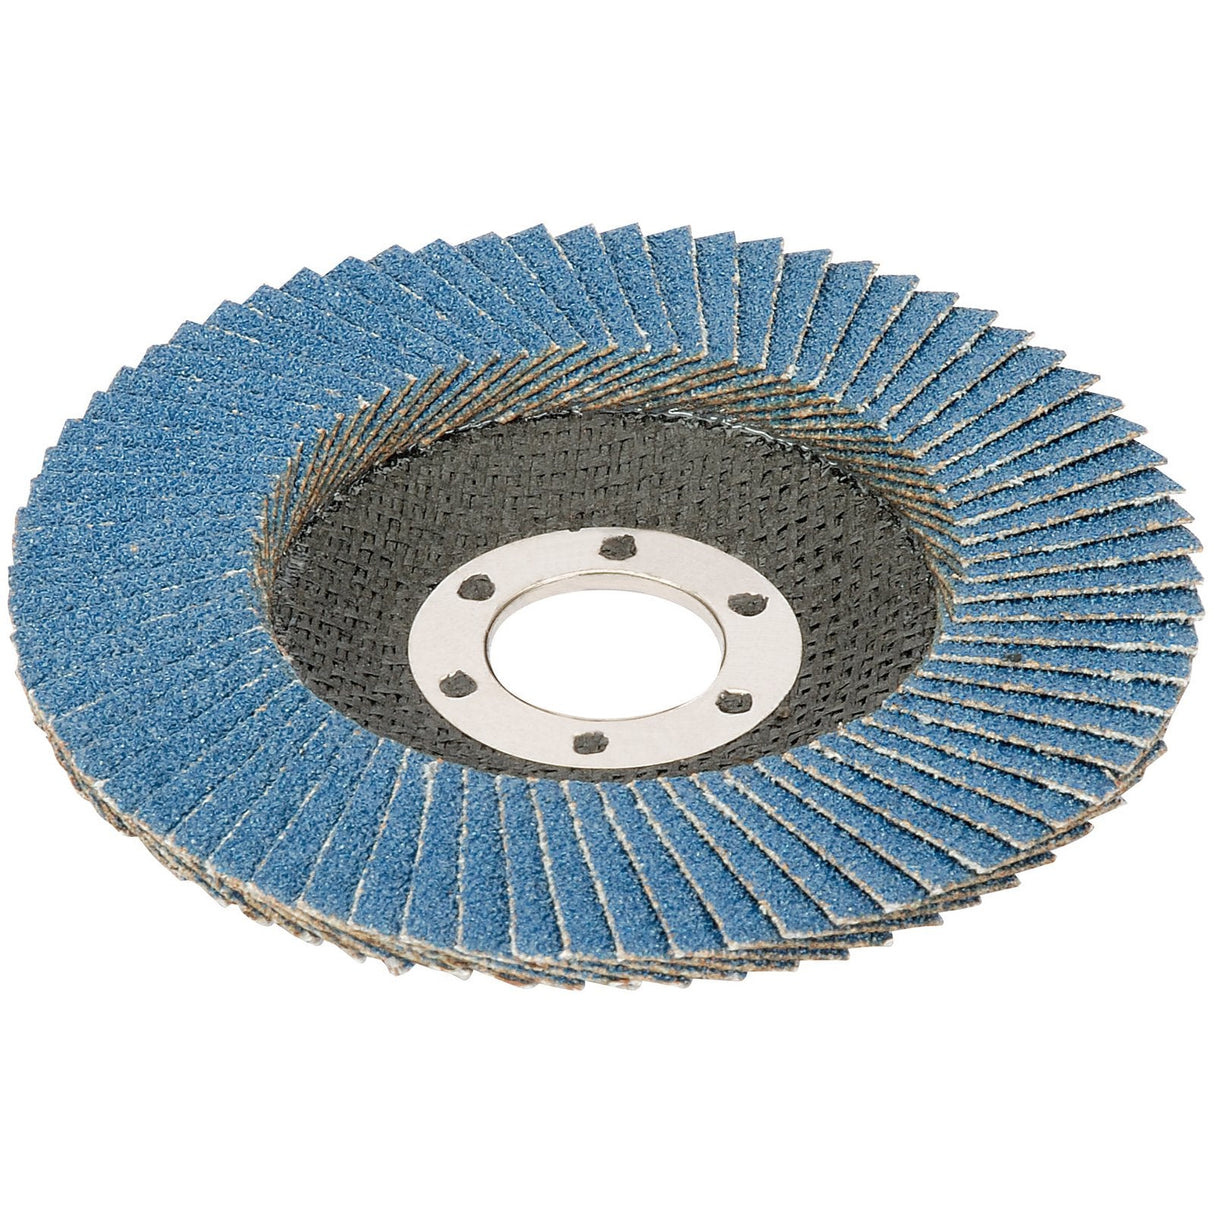 Draper Zirconium Oxide Flap Disc, 125mm, 80 Grit - APT149 - Farming Parts